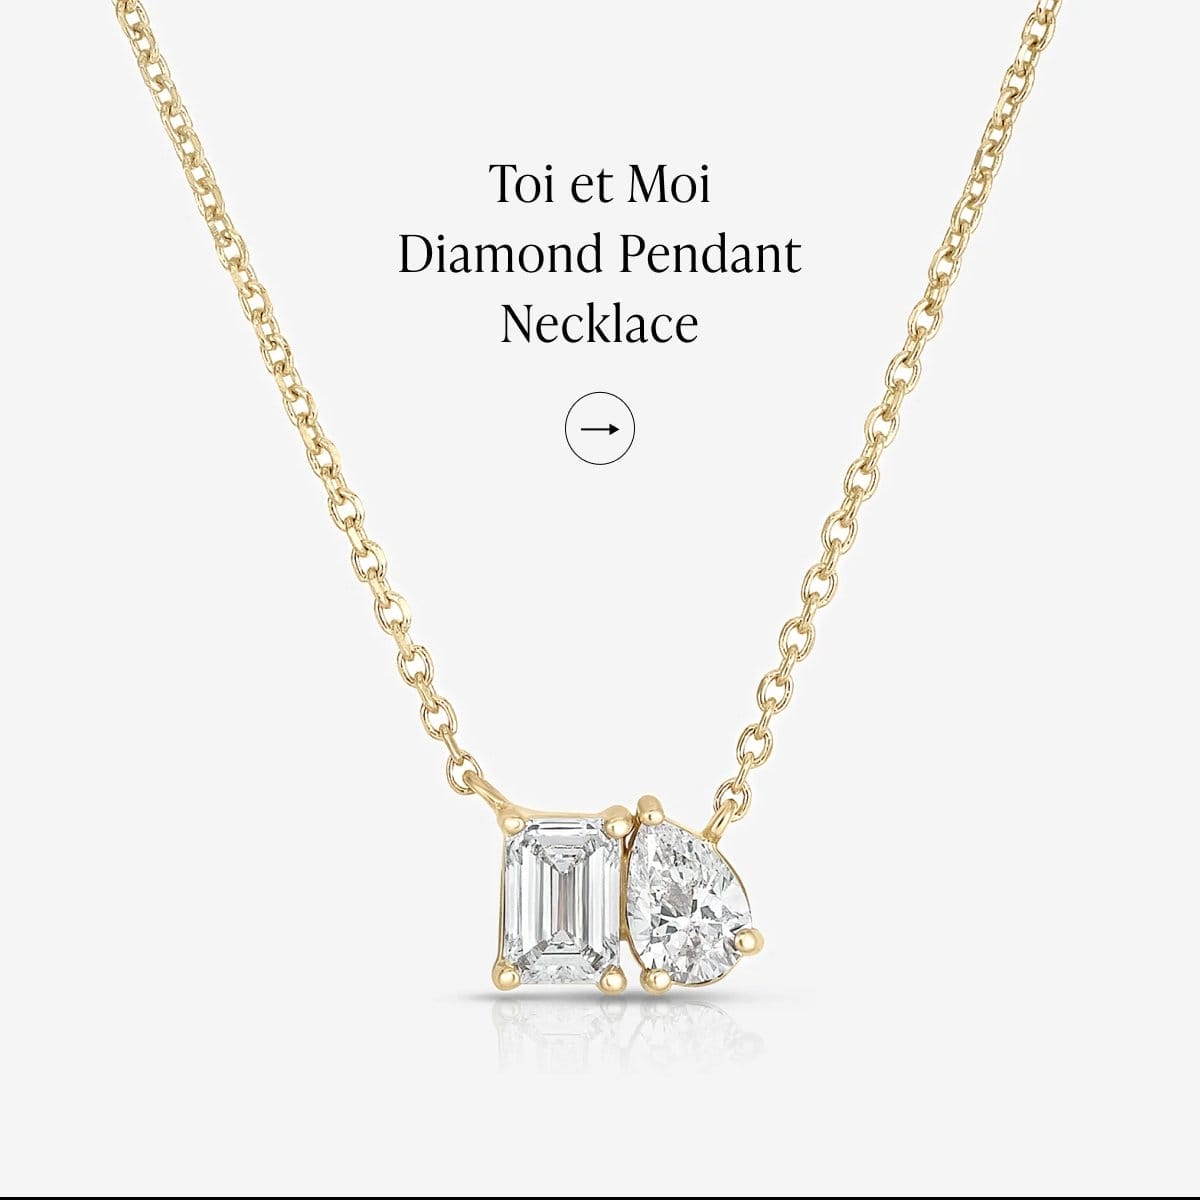 Toi et Moi Diamond Pendant Necklace